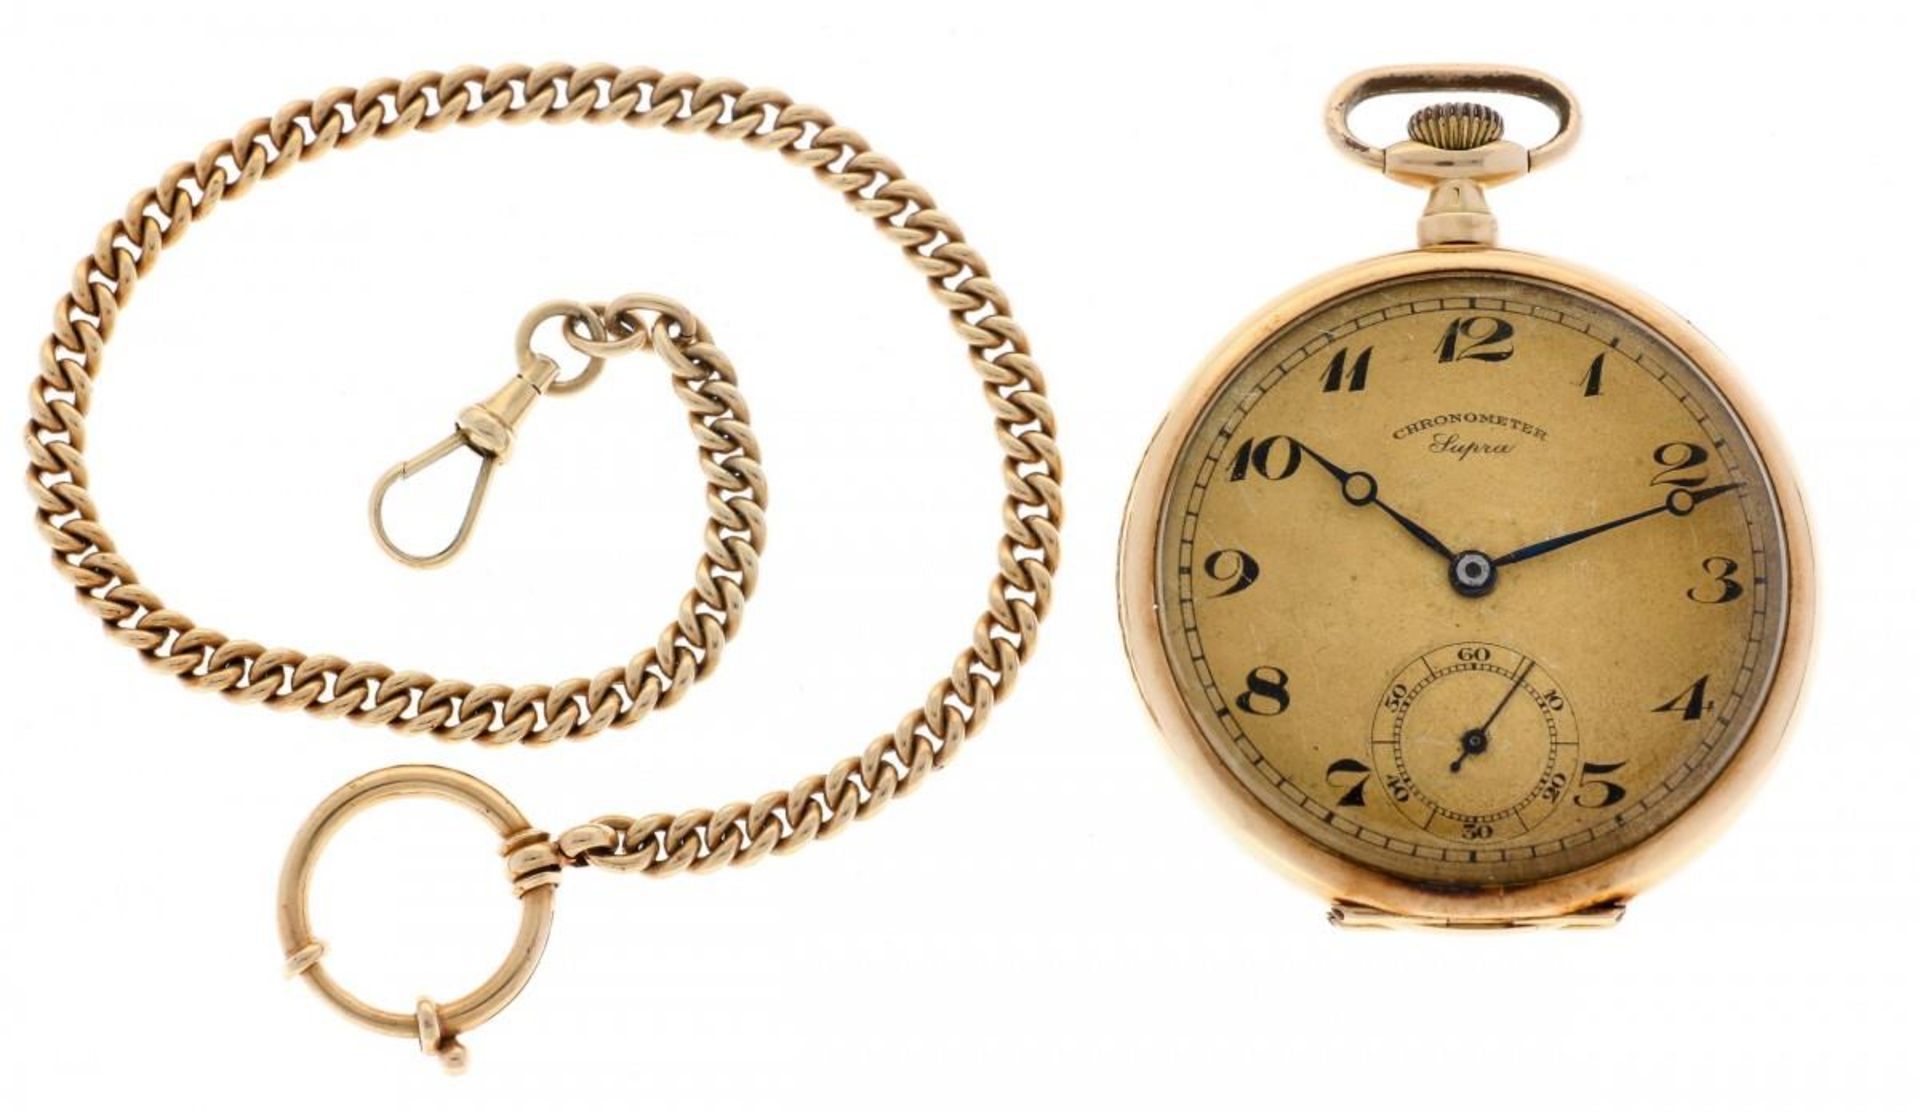 Chronometer Supra - Golden pocket watch with golden chain - ca. 1915.